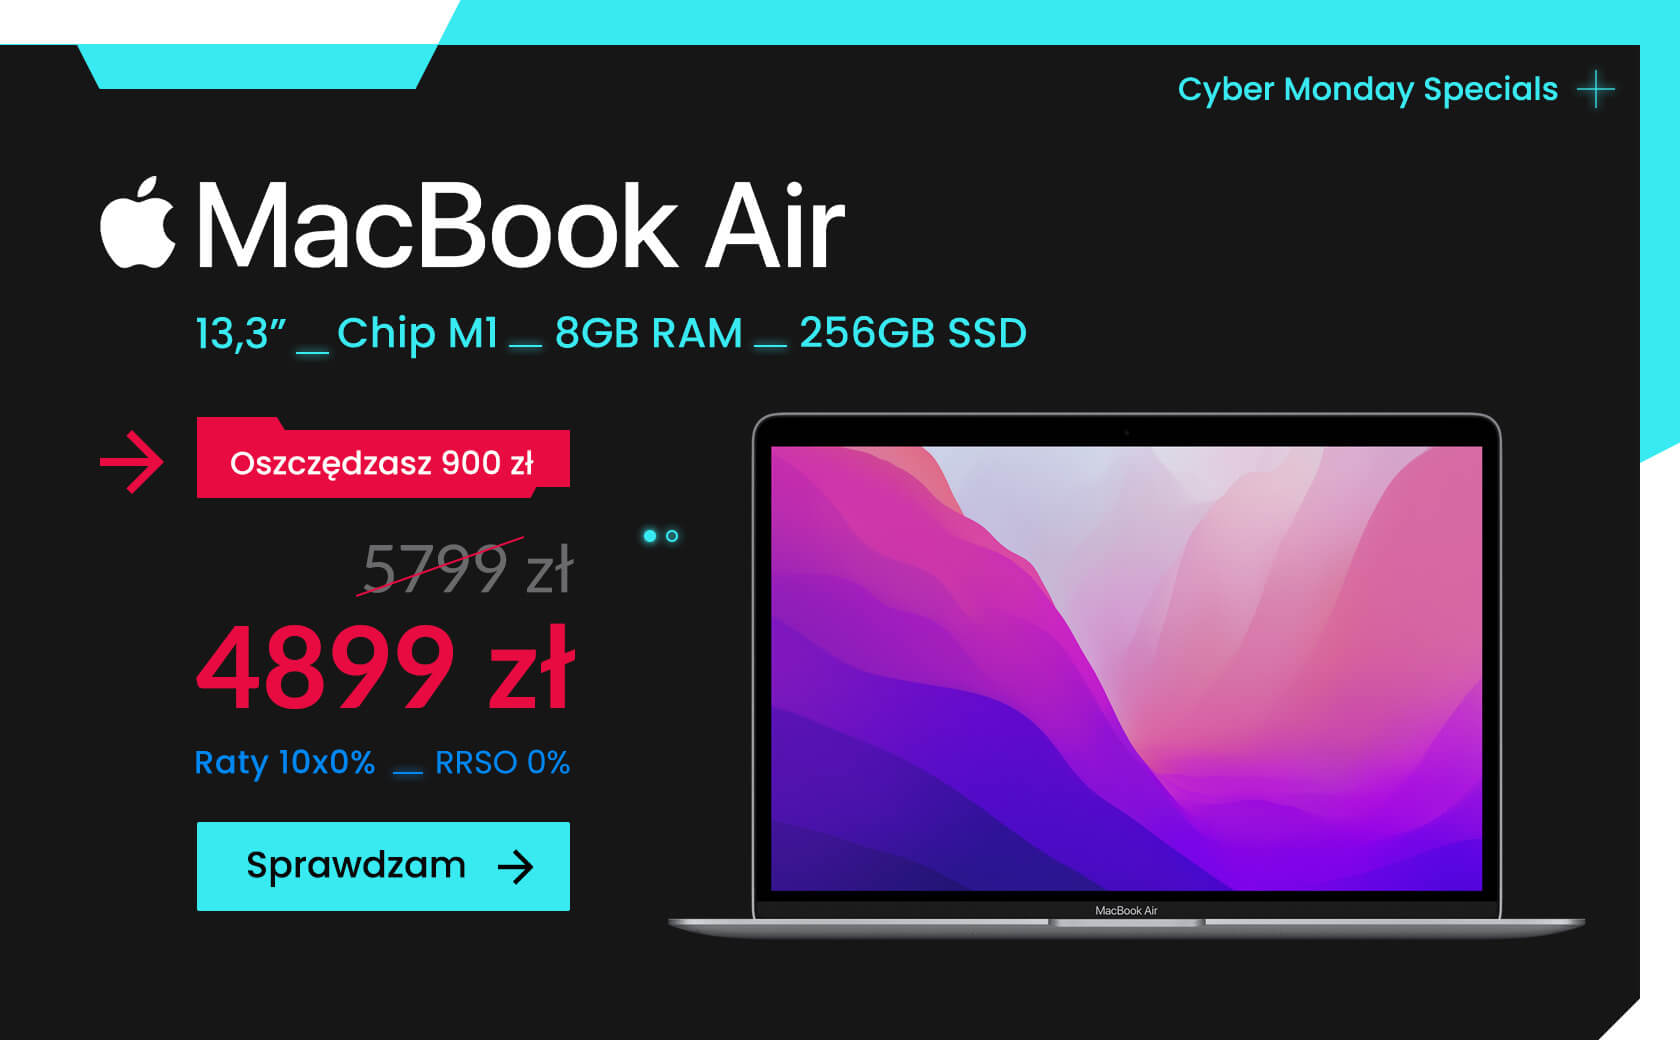 Cyber Monday Specials - MacBook Air M1